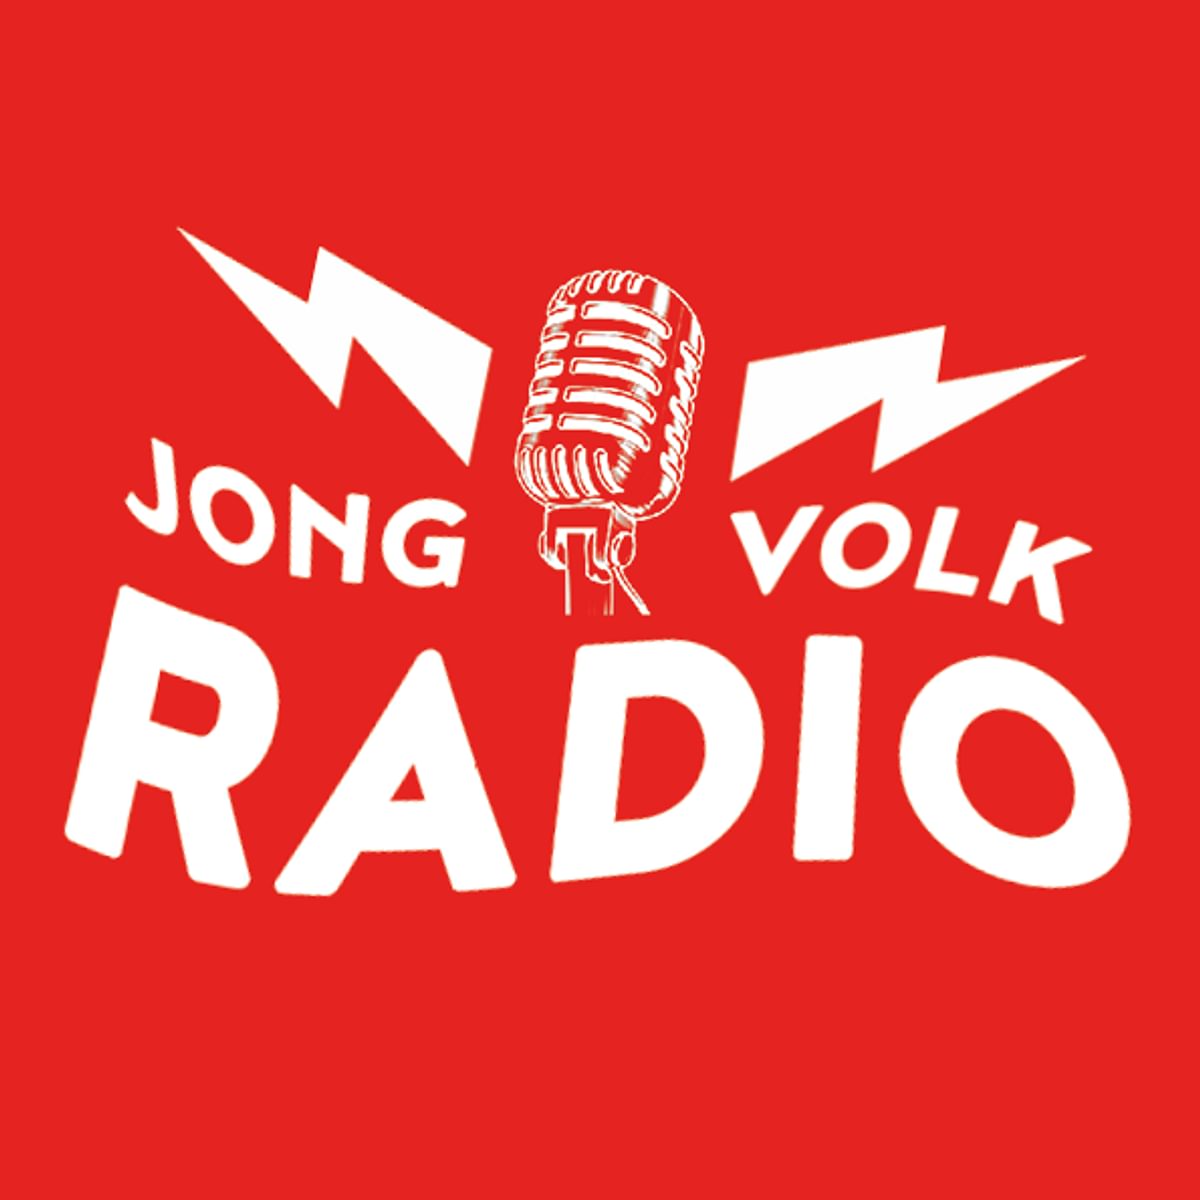 JONG VOLK RADIO!